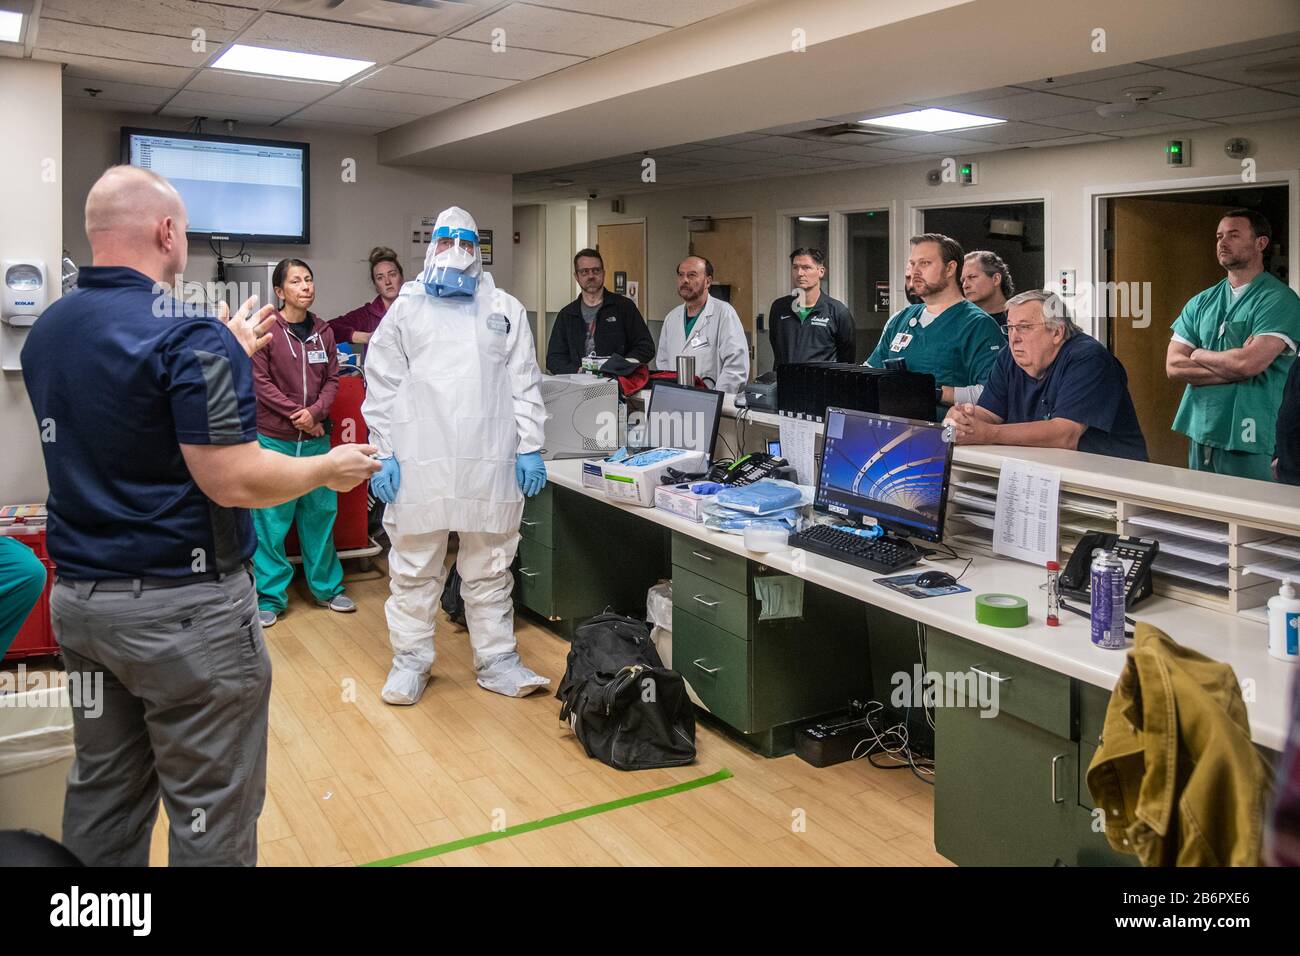 National Guard providing Coronavirus personal protective equipment (PPE) training at Cabell Huntington Hospital in preparation for Coronavirus cases. Stock Photo